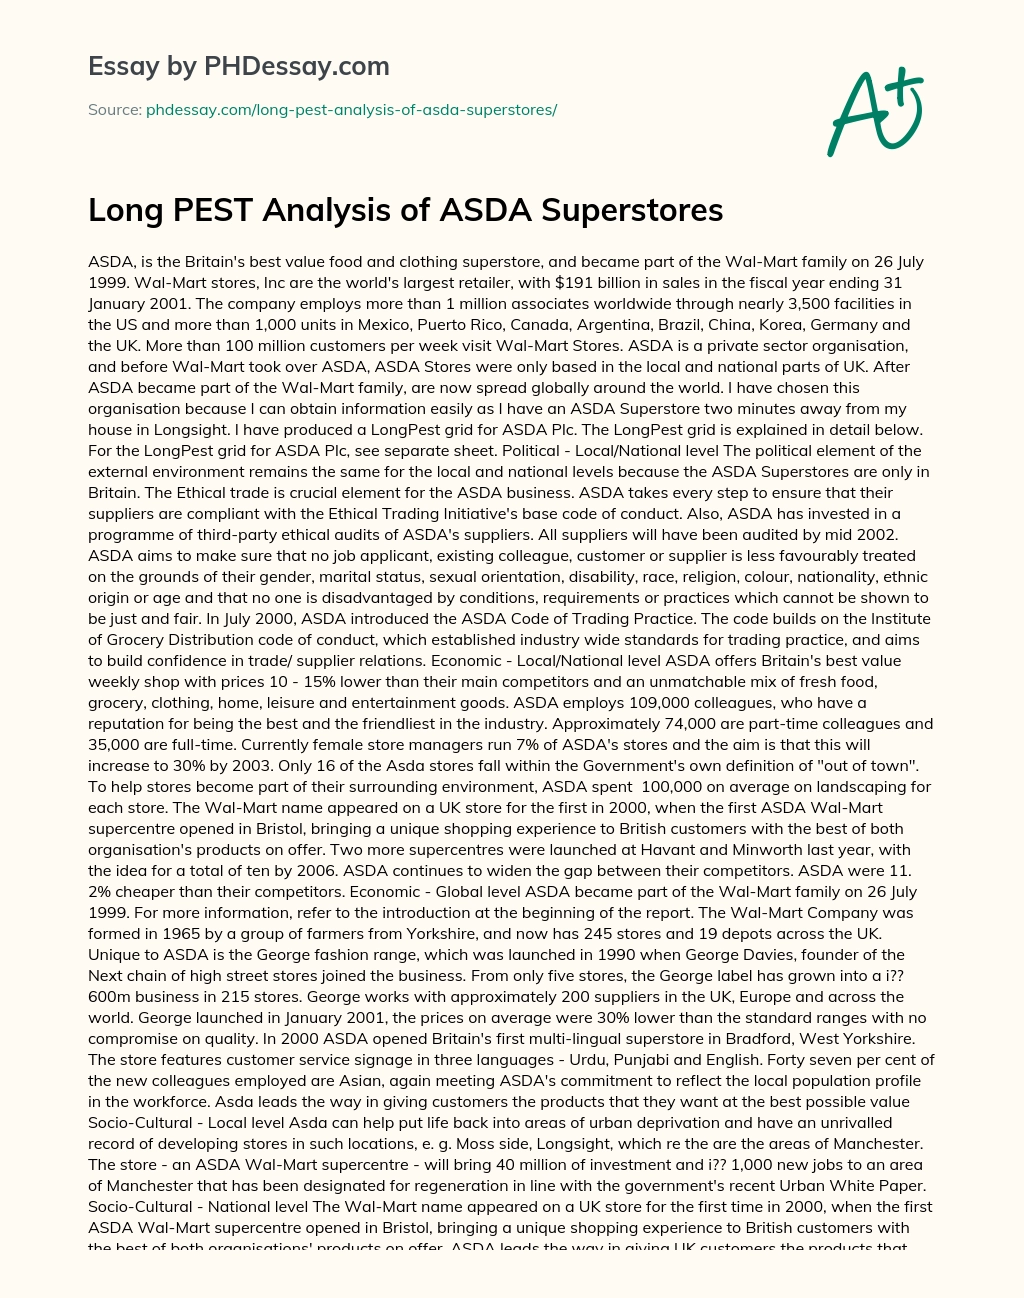 Long PEST Analysis of ASDA Superstores essay